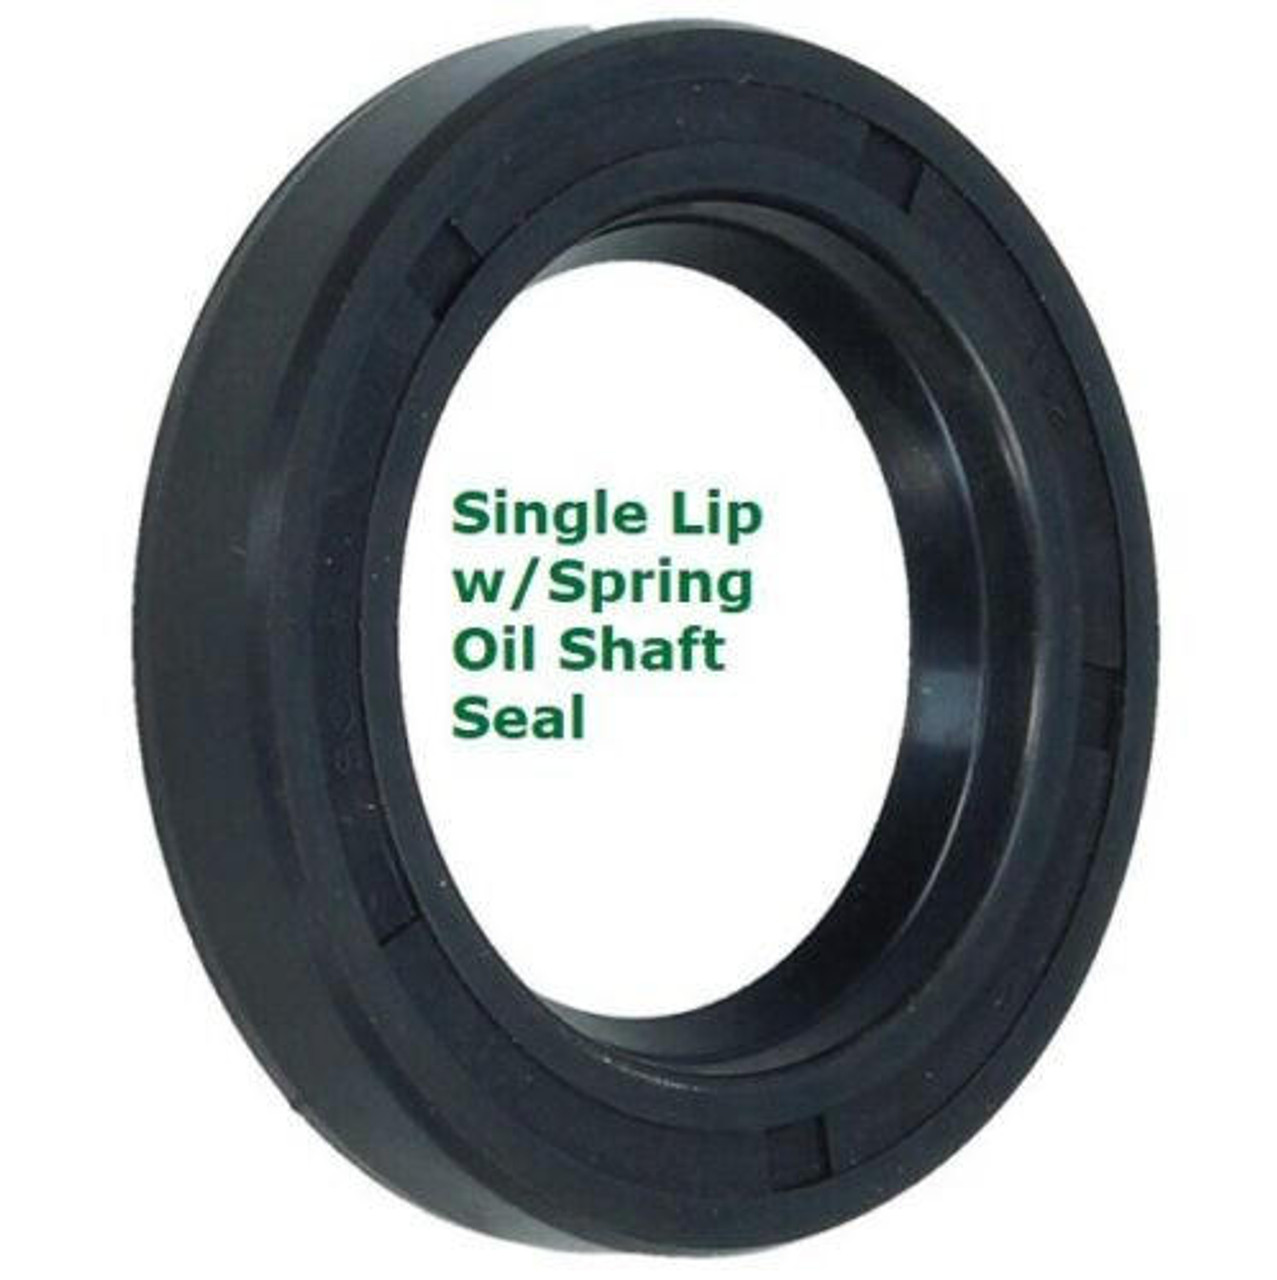 Metric Oil Shaft Seal 70 x 85 x 7mm Single Lip   Price for 1 pc